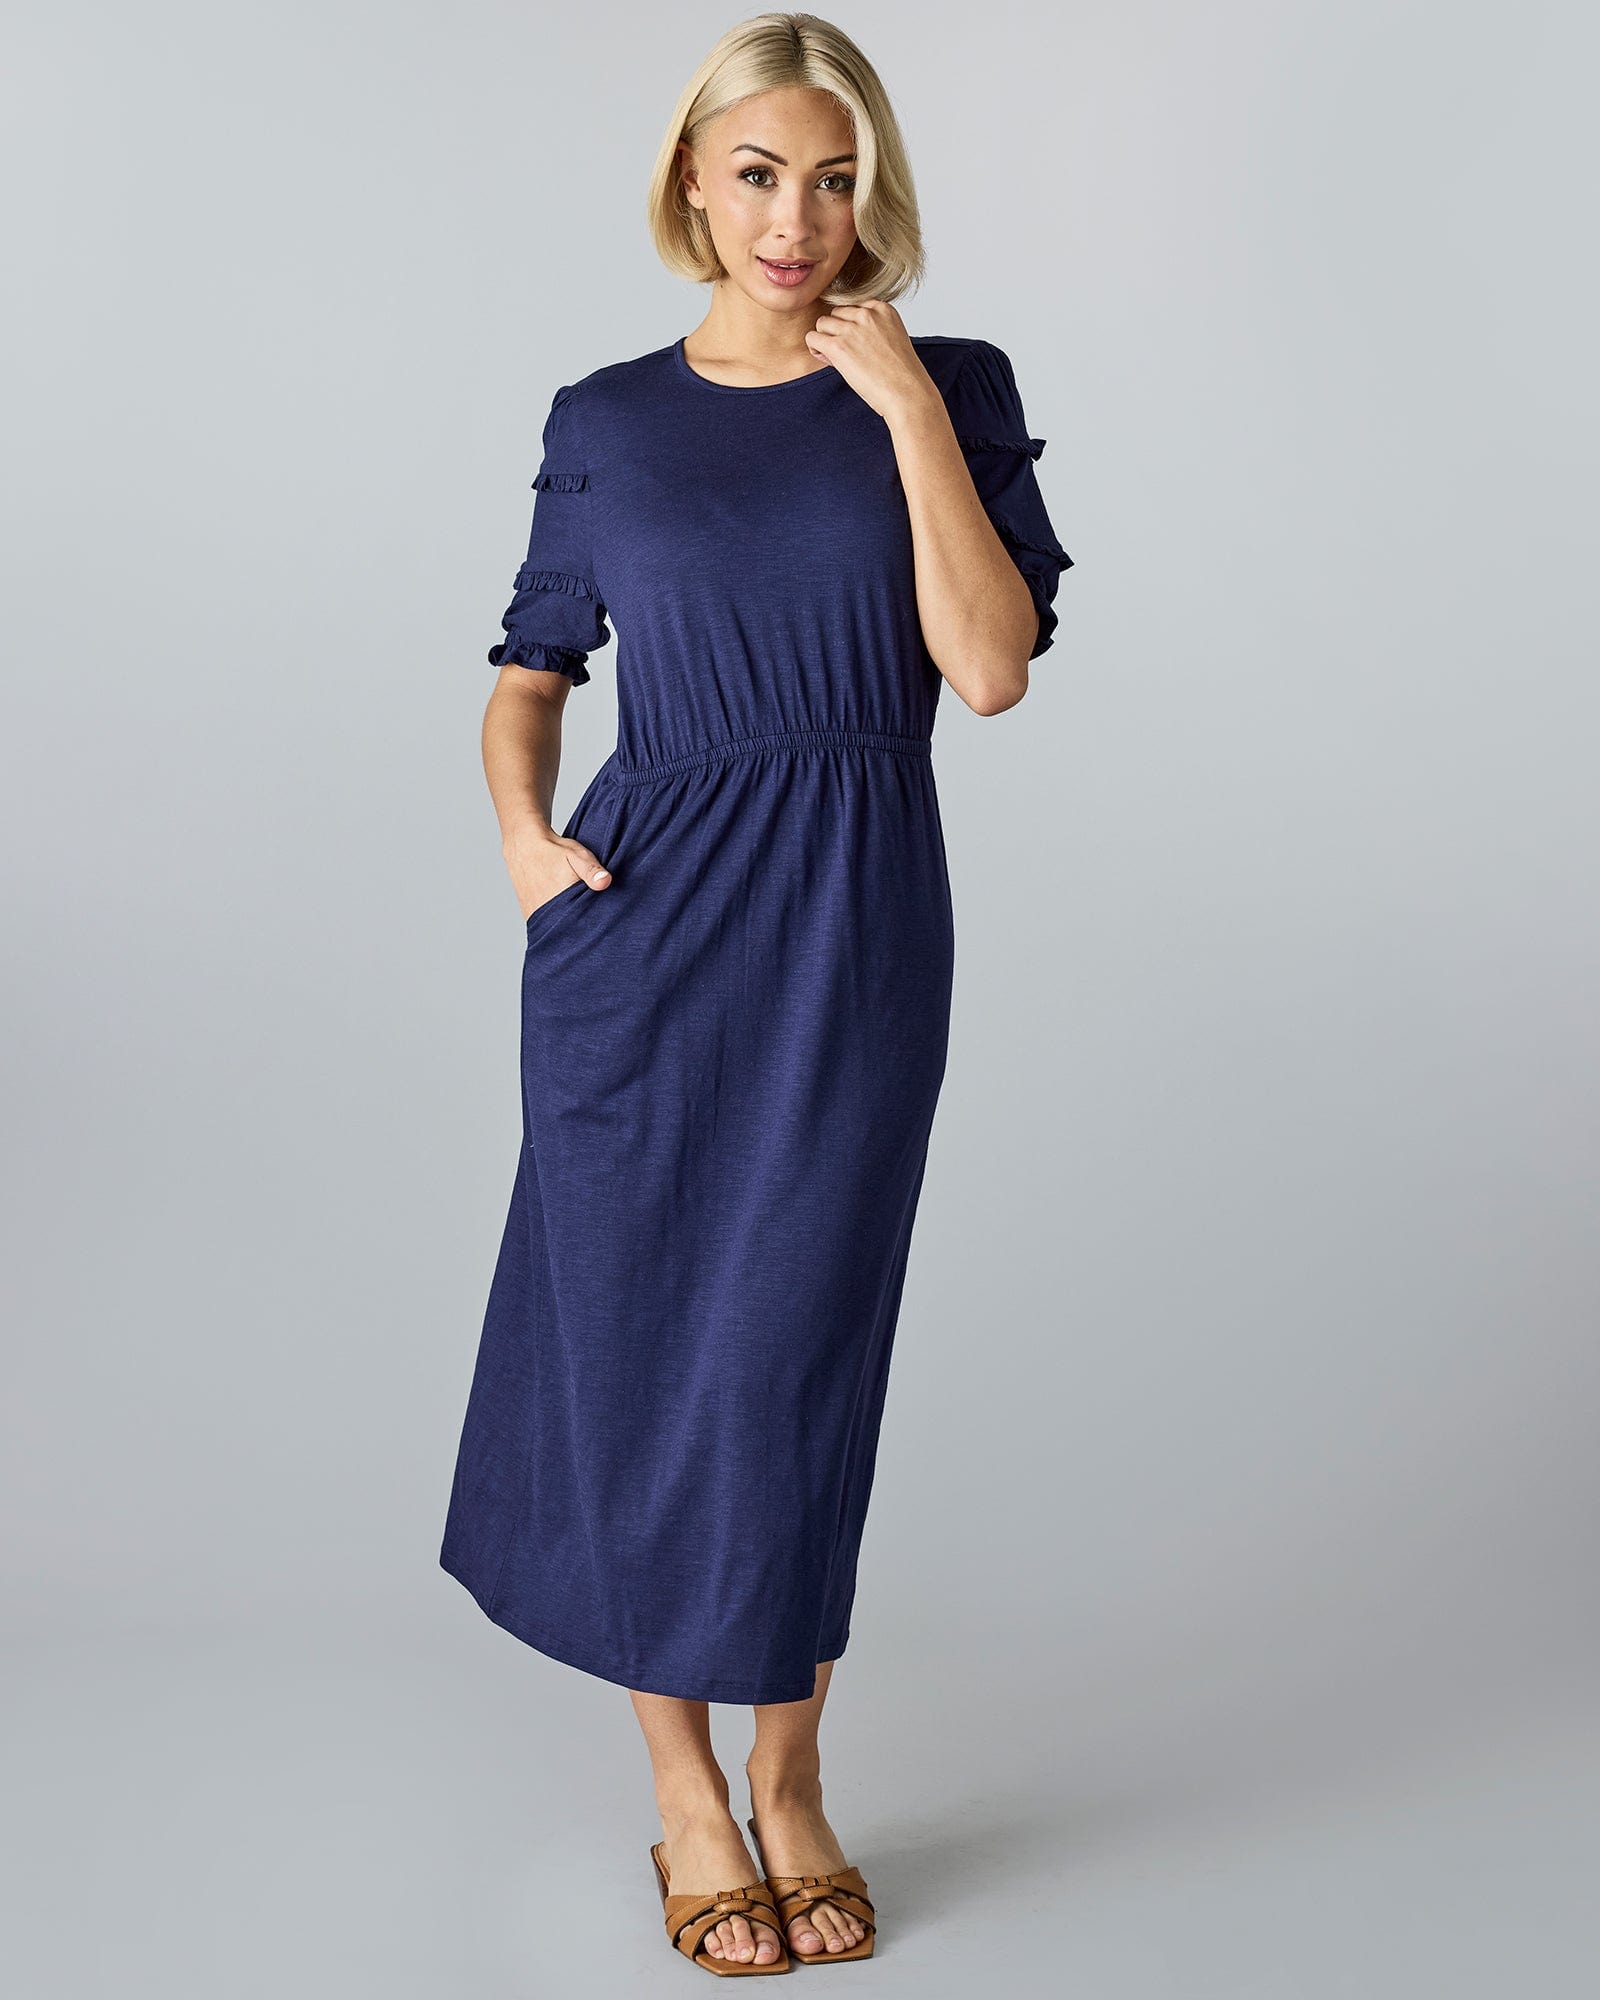 Woman in a blue, midi-length, short sleeve dress.